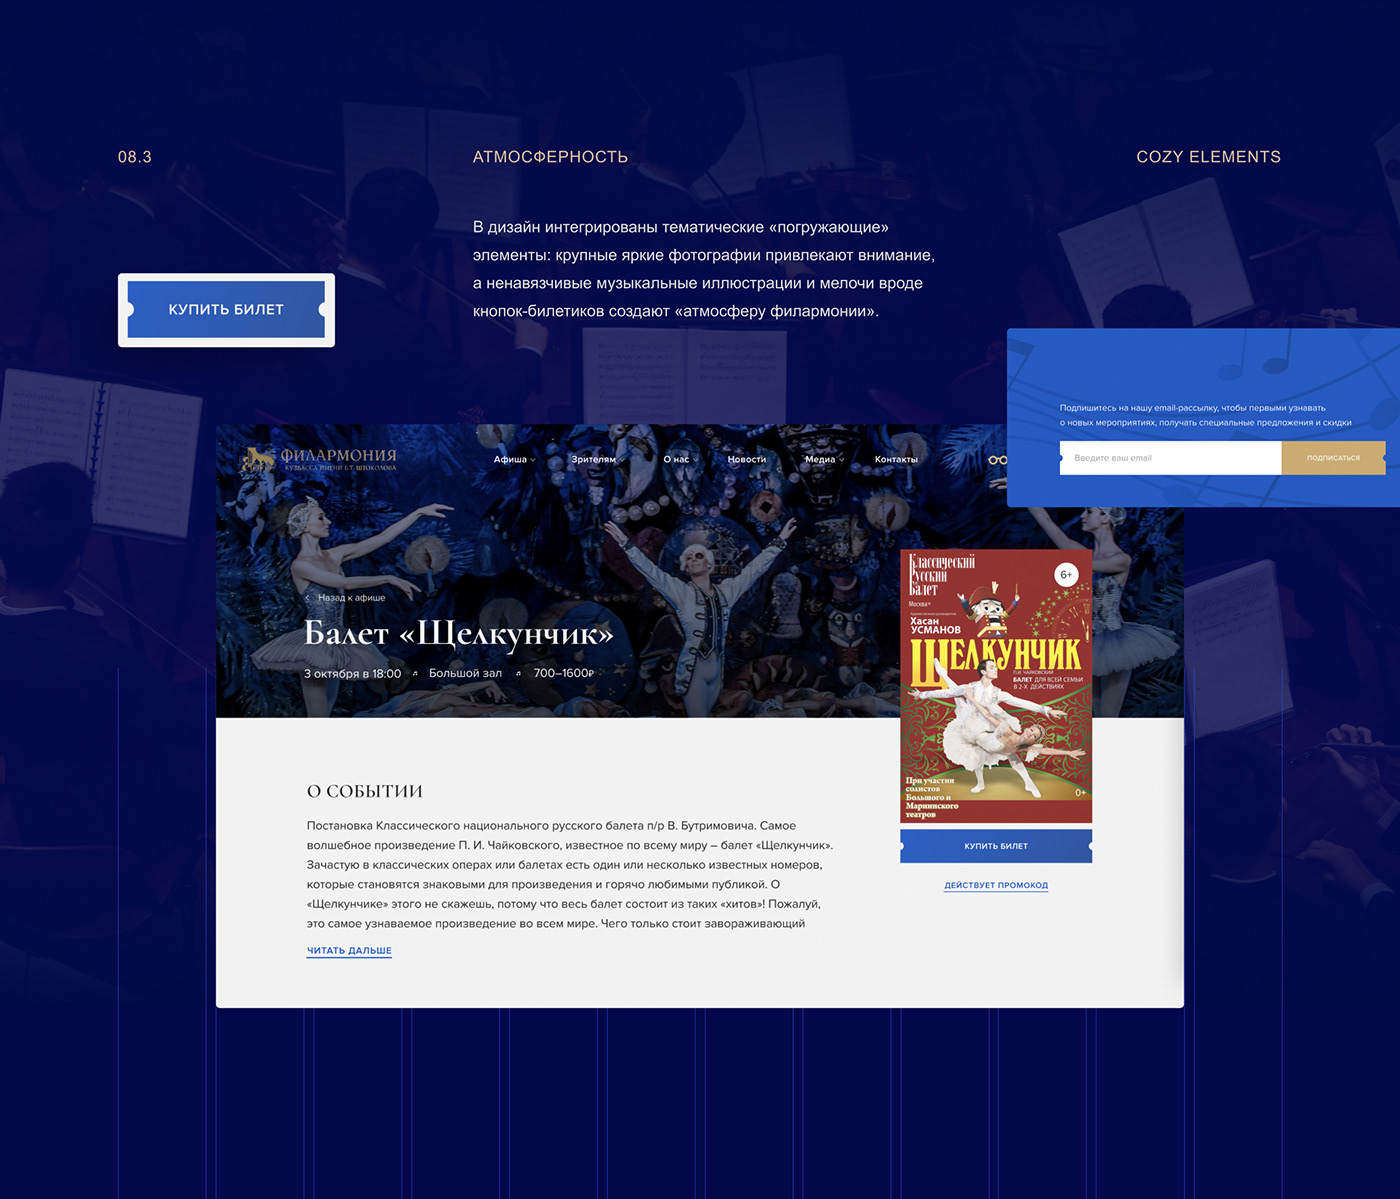 ballet culture music Theatre User Experience Design UX design UX Research website redesign Webdesign UX Case Study